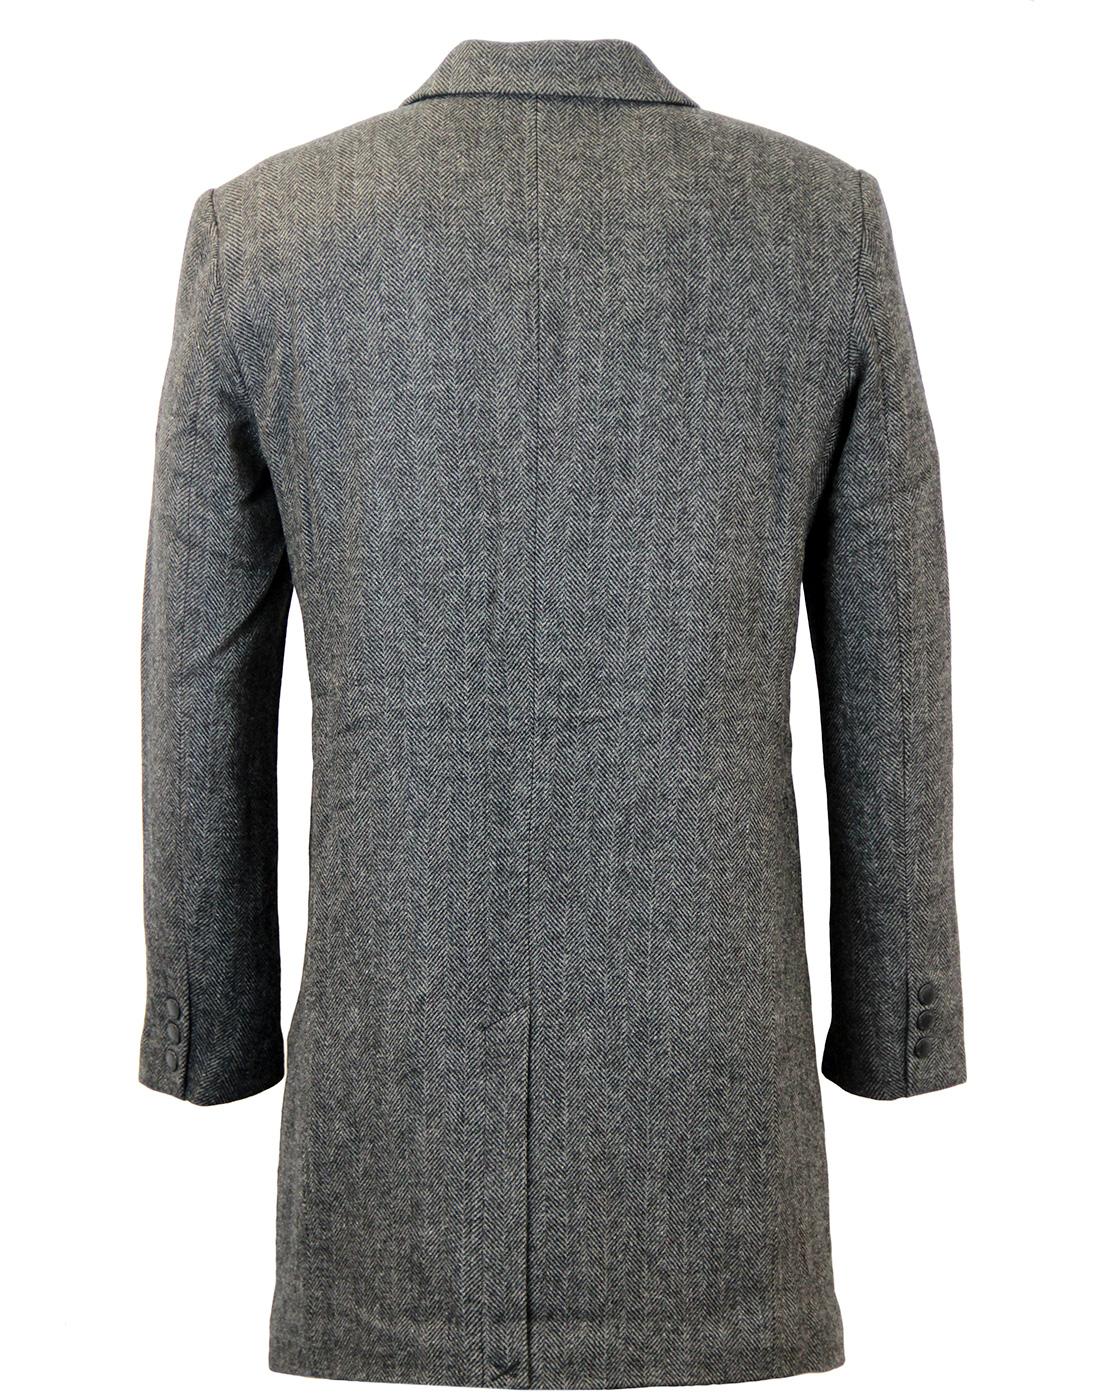 NATIVE YOUTH Retro 60s Mod Padded Wool Herringbone Overcoat Grey